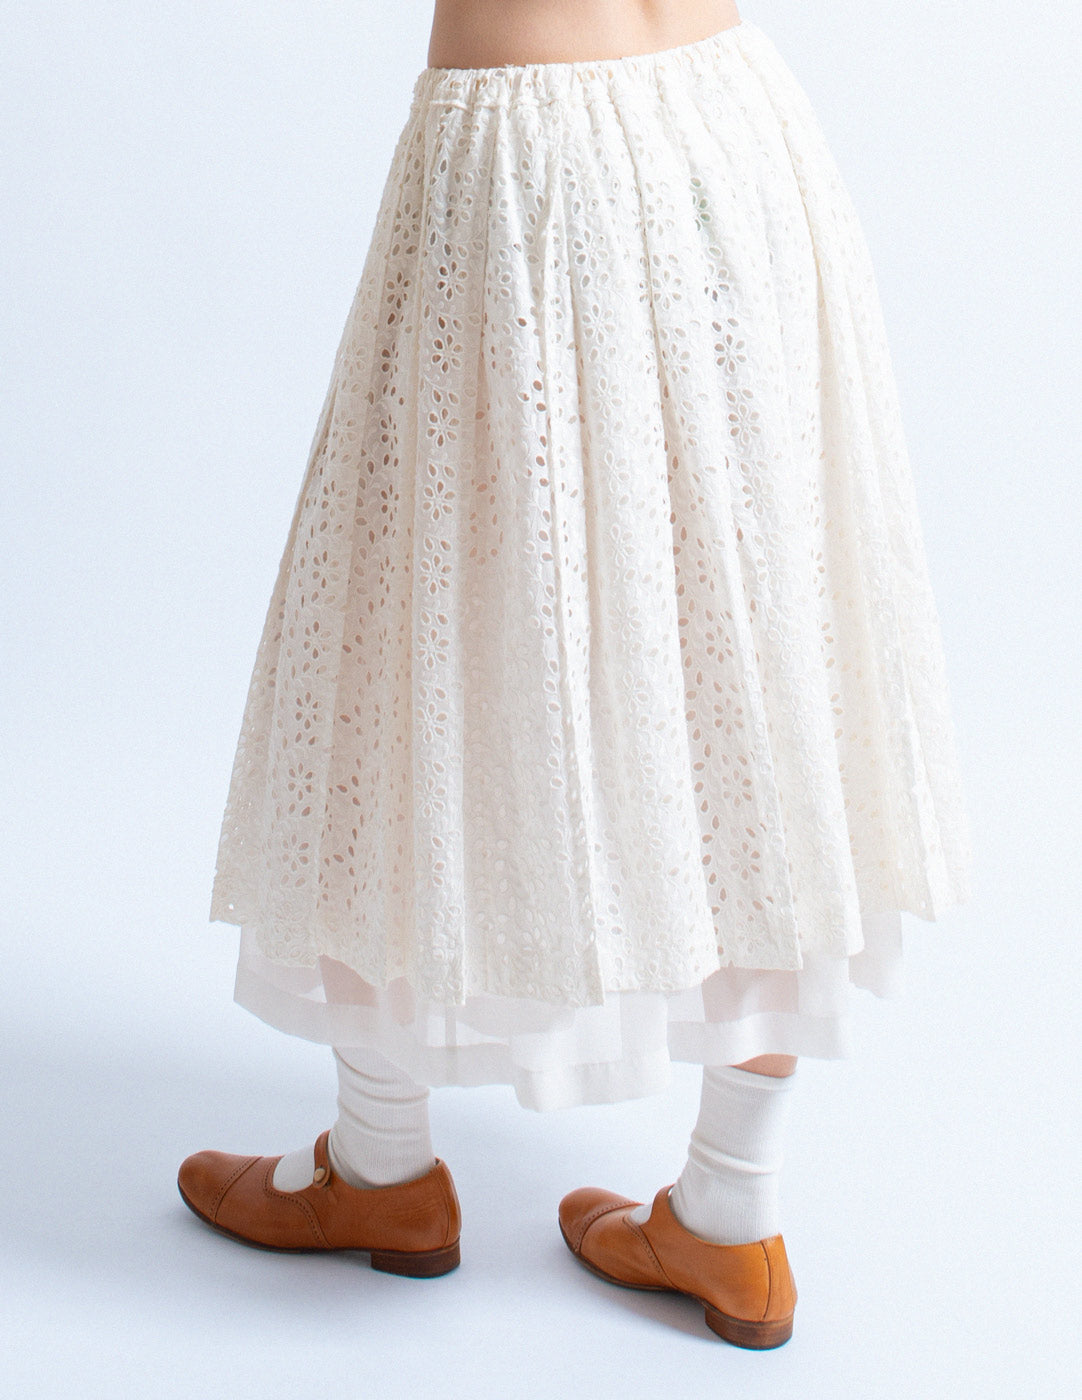 Comme des Garçons tricot white cotton eyelet layered skirt back detail